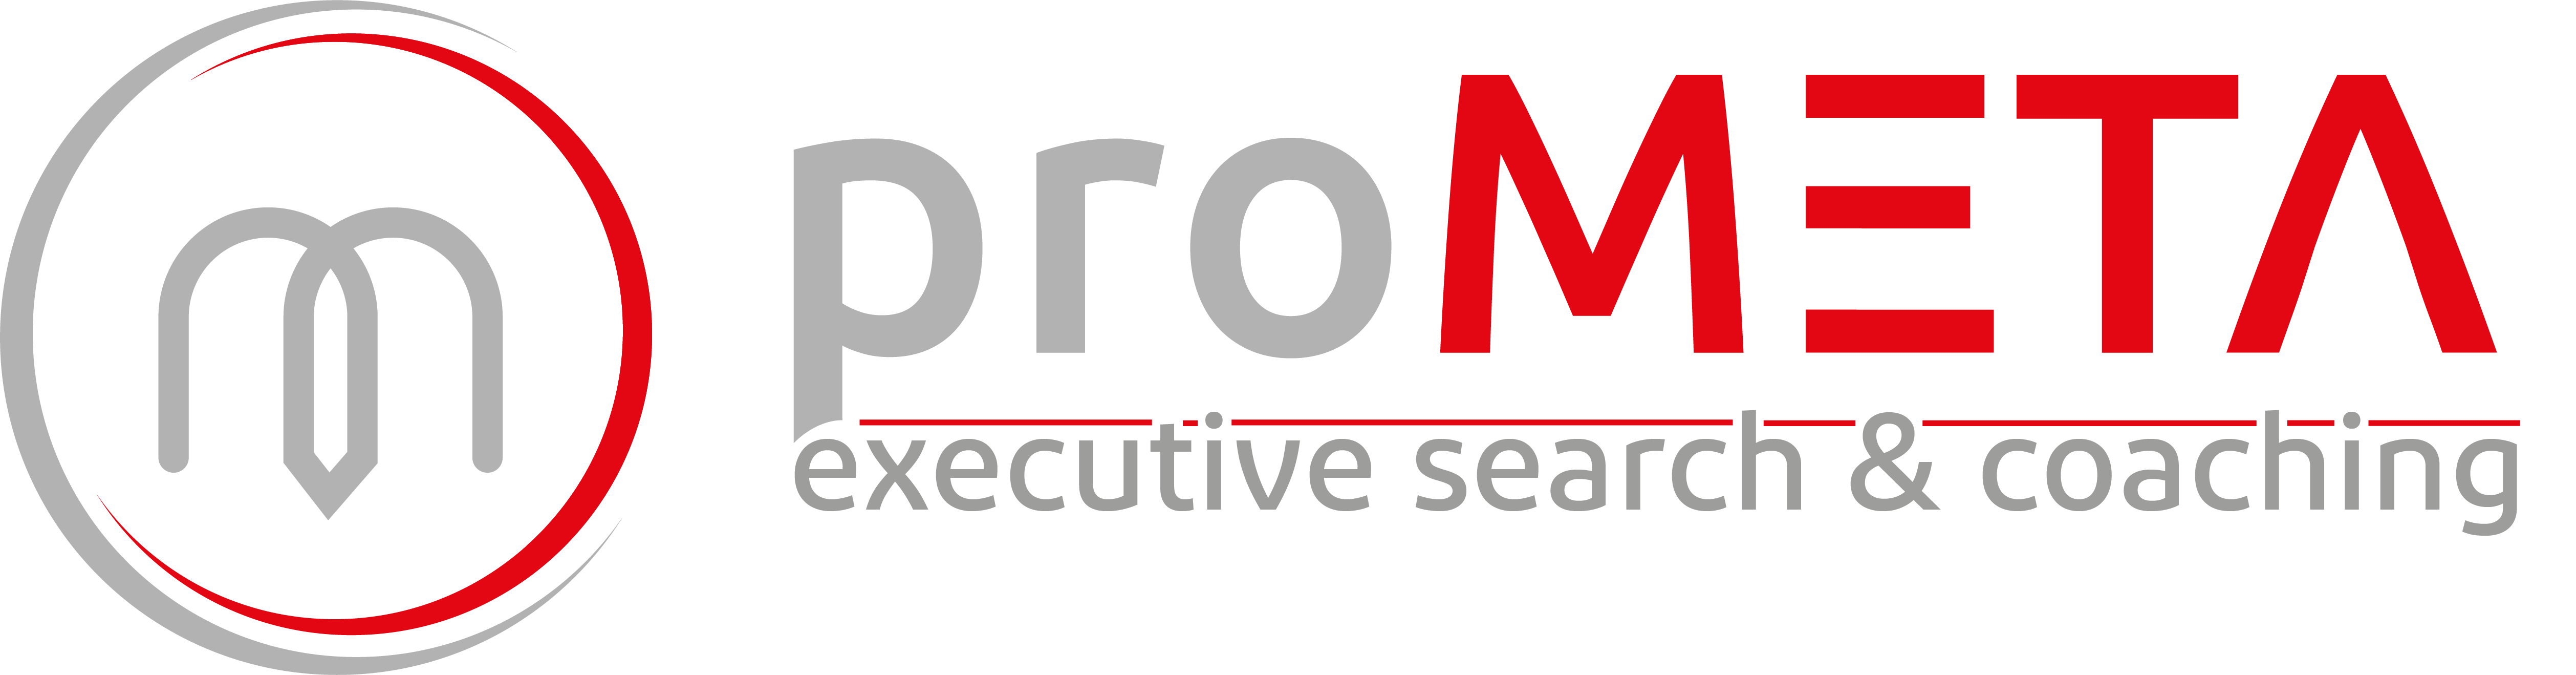 proMETA_Logo_executive search & coaching